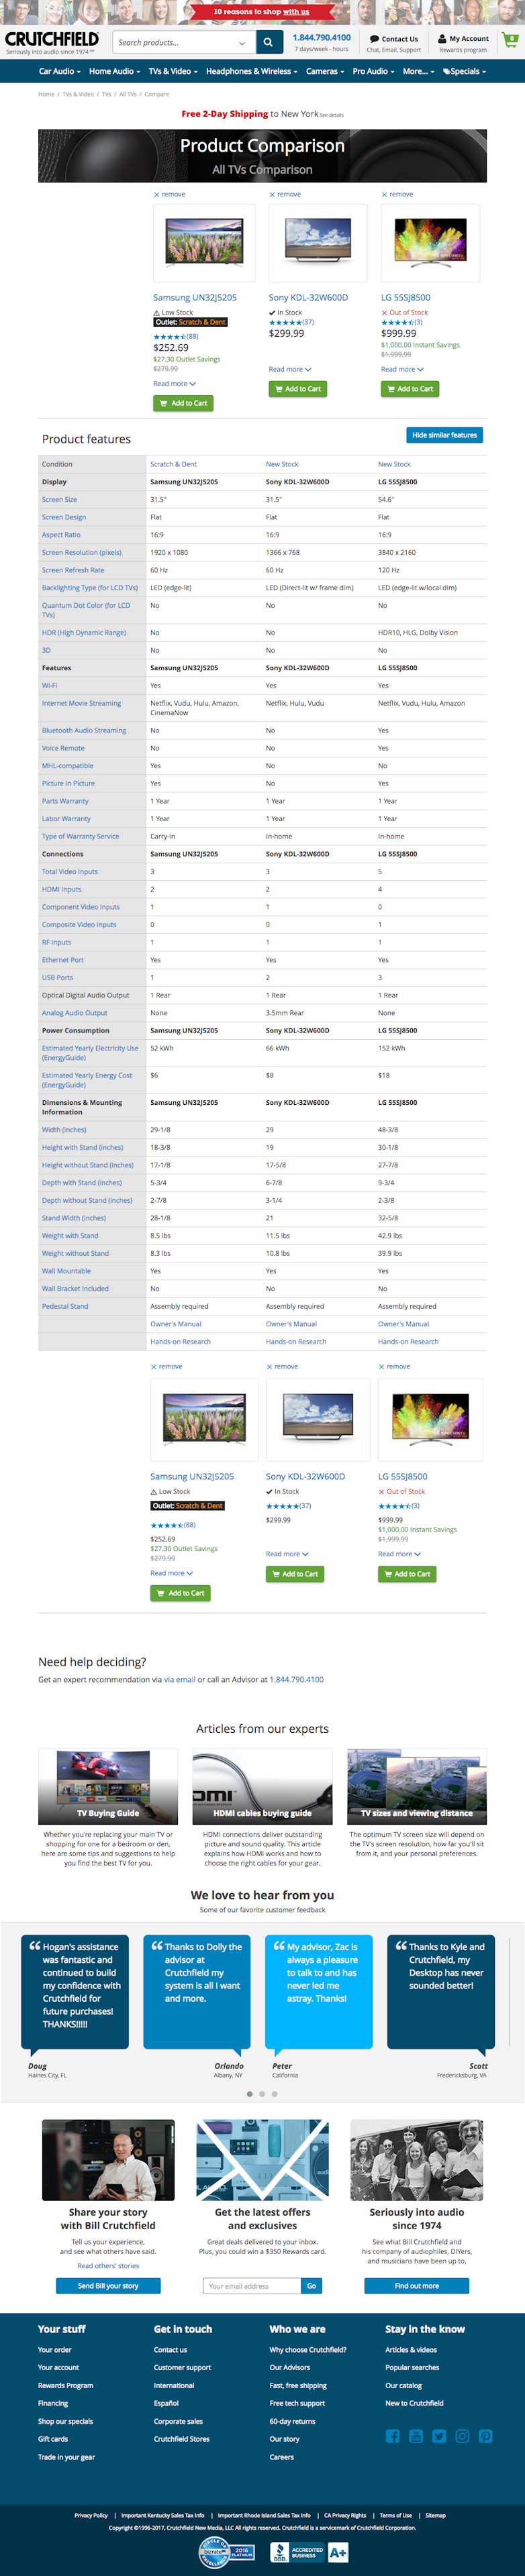 Sample comparison websites